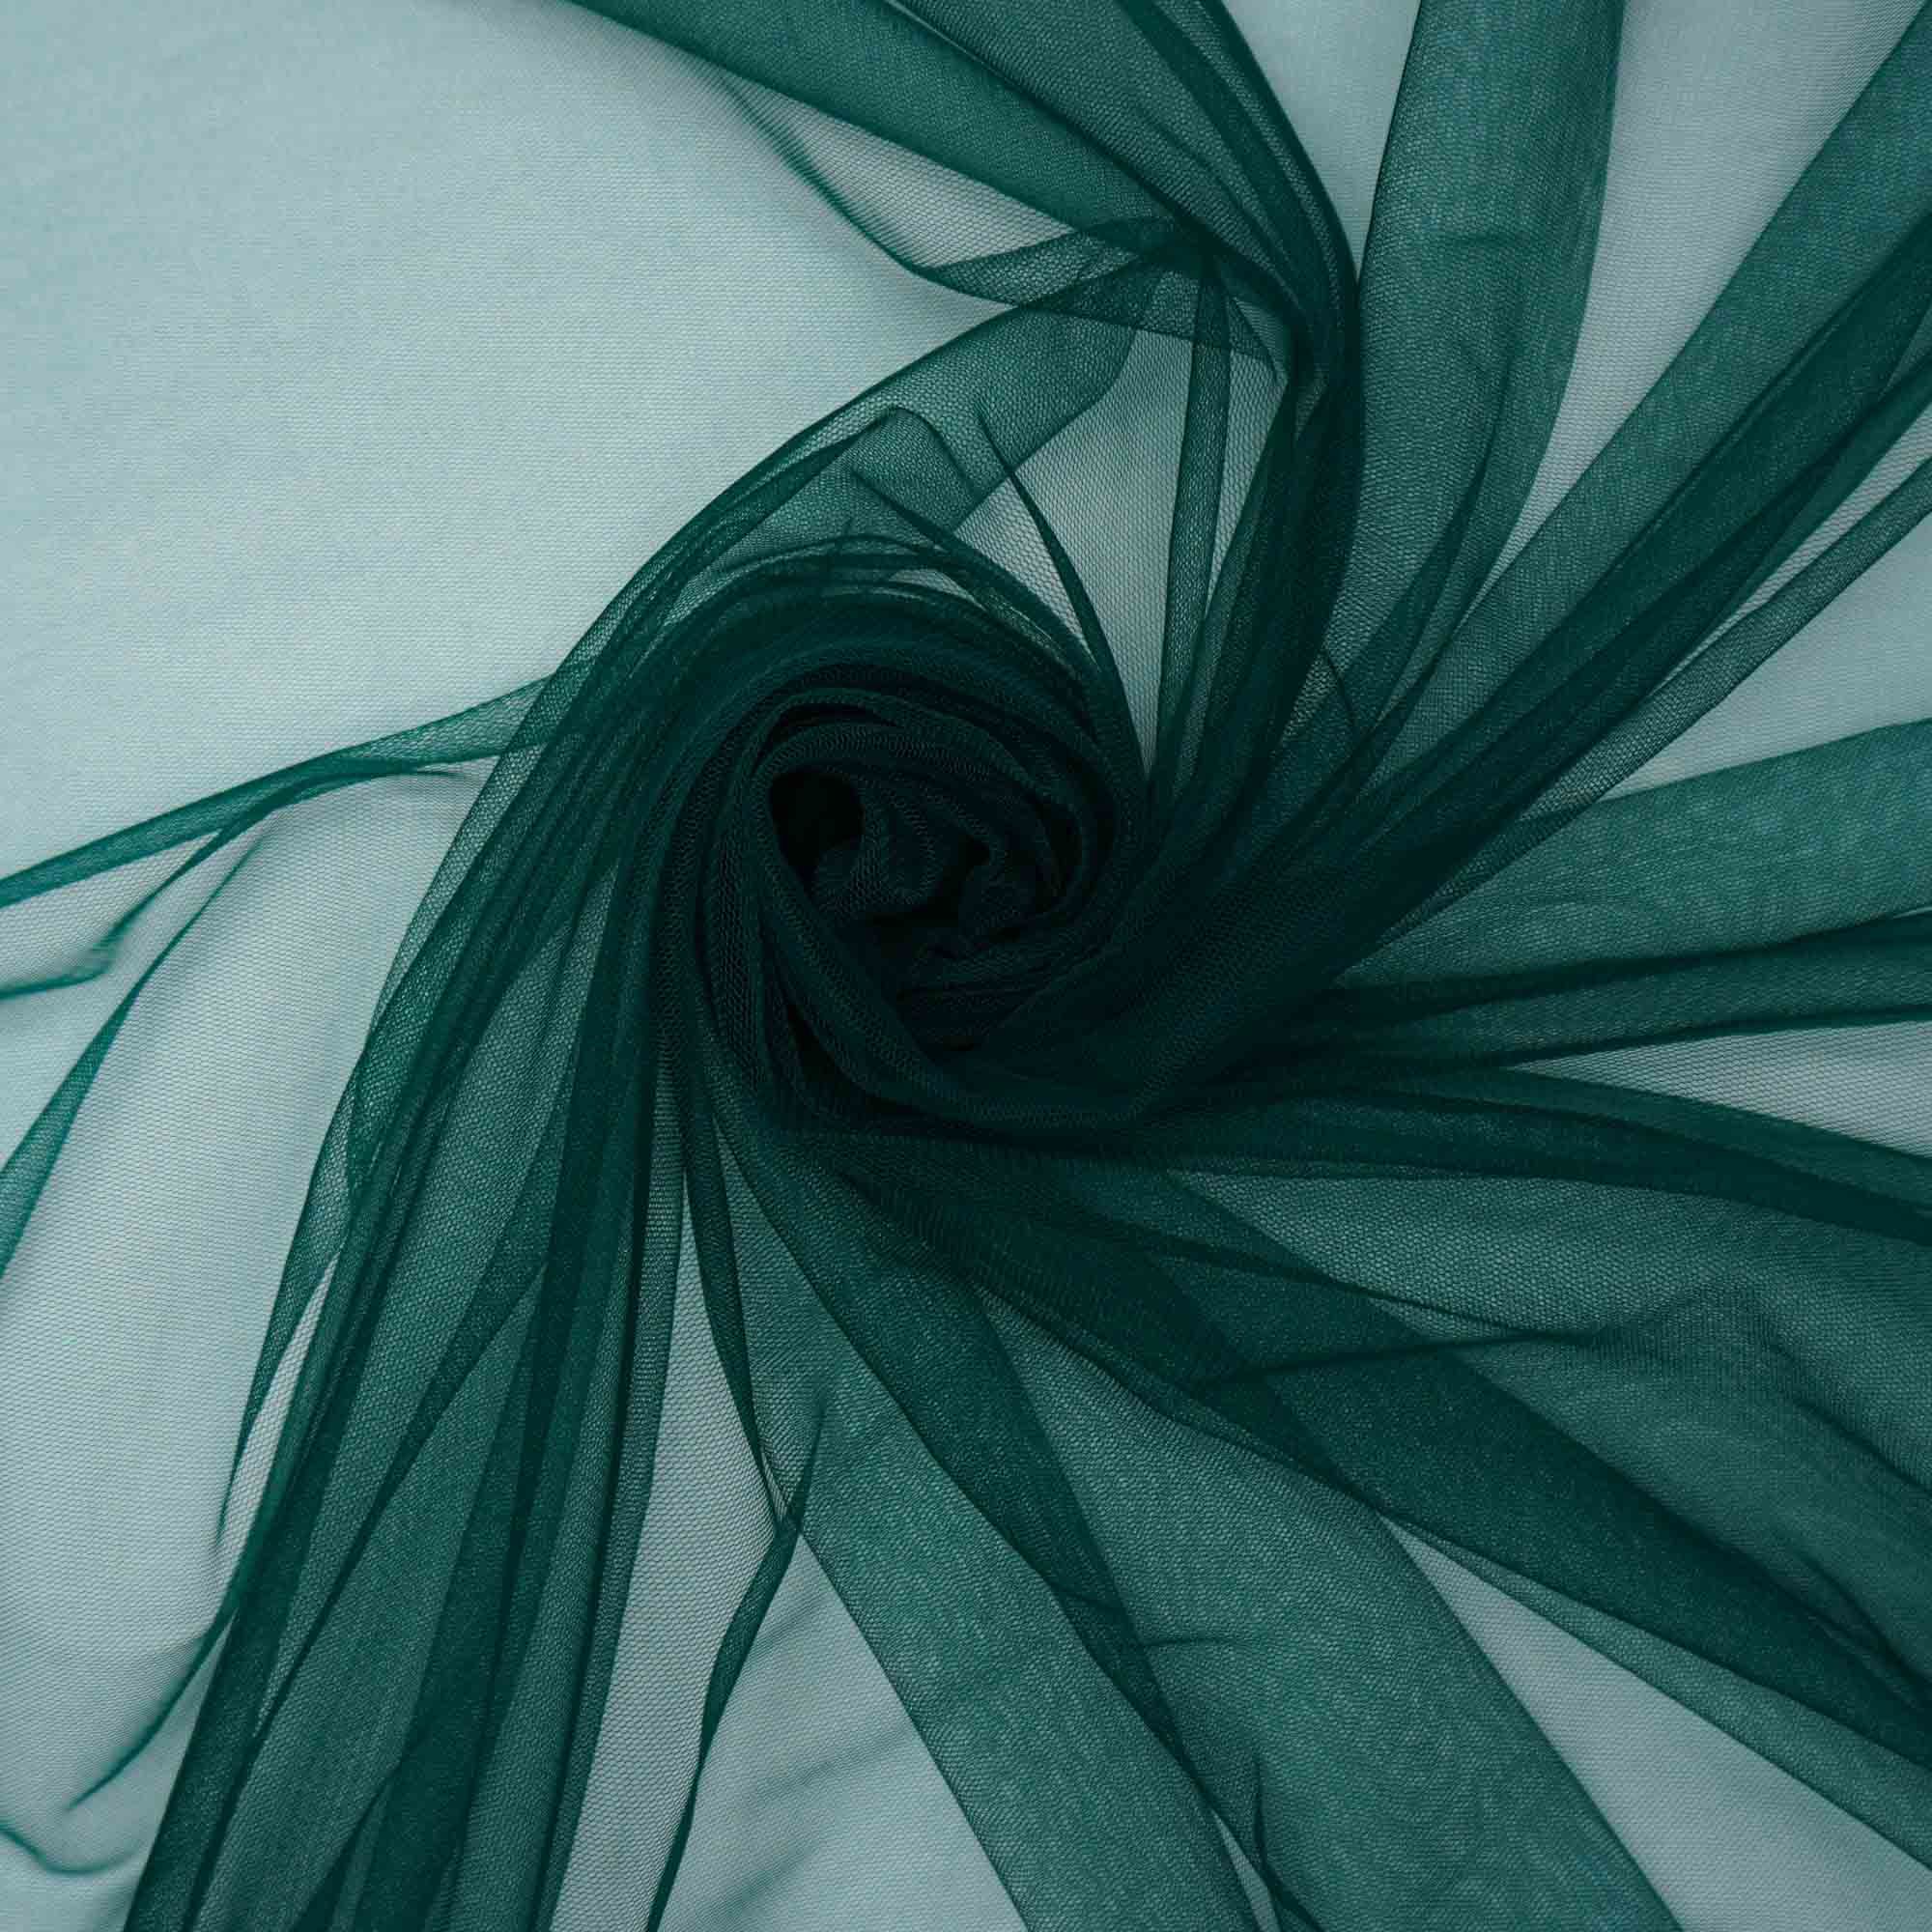 Tecido tule ilusione (ilusion) verde musgo